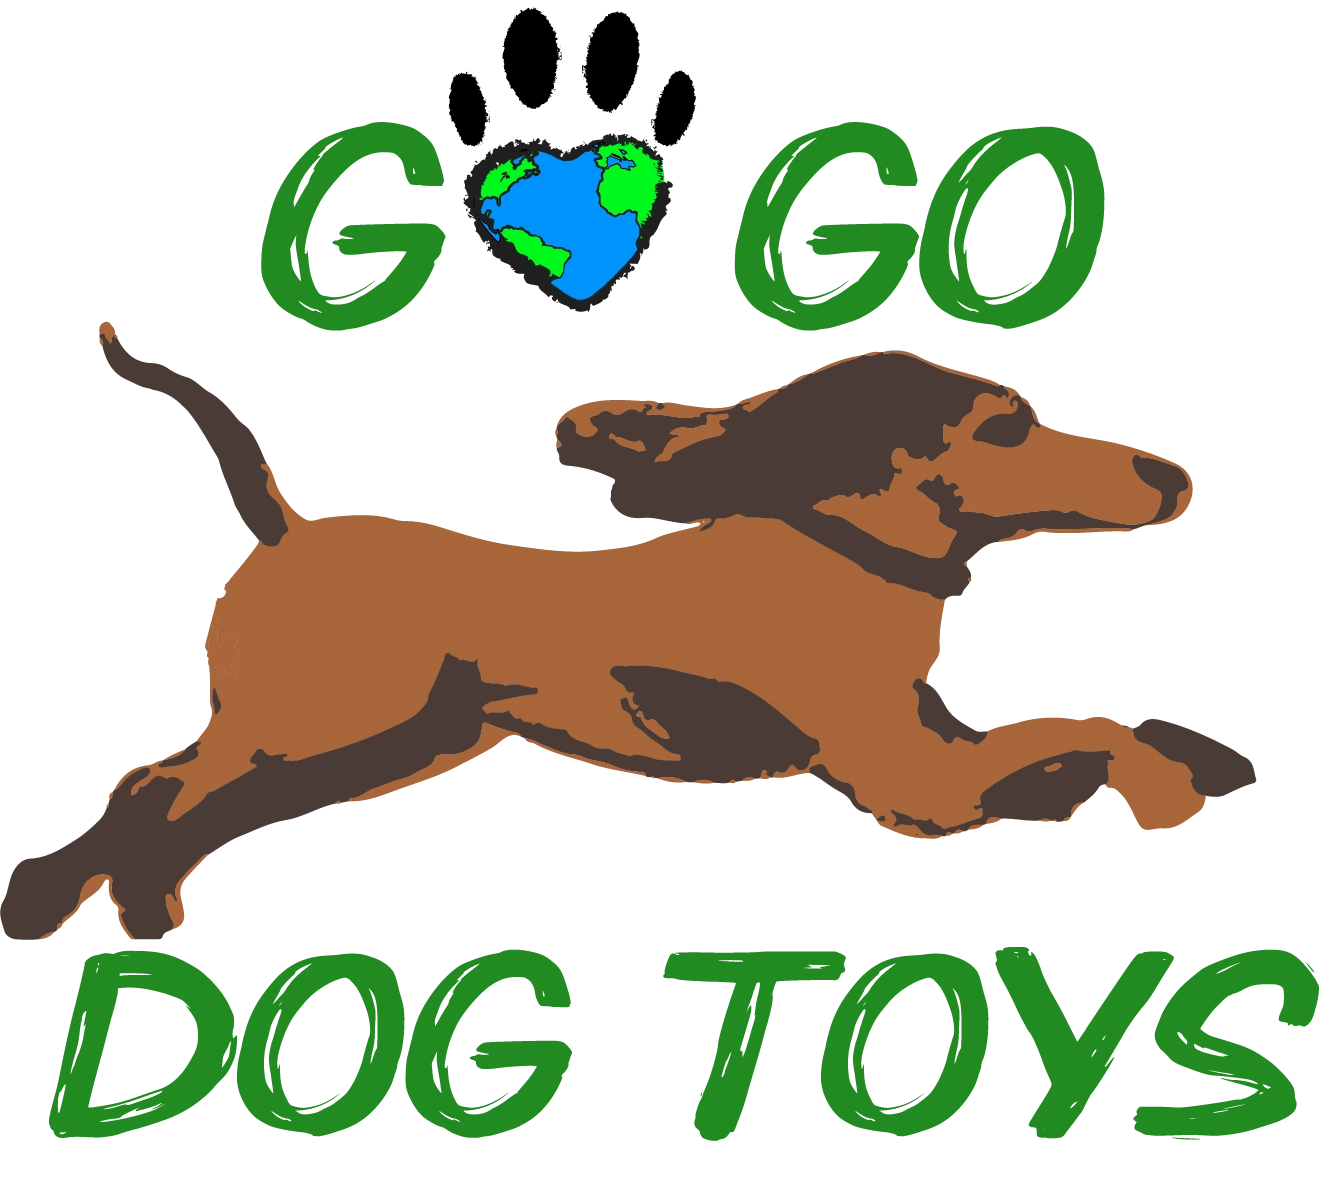 Go Go Dog Toys Logo